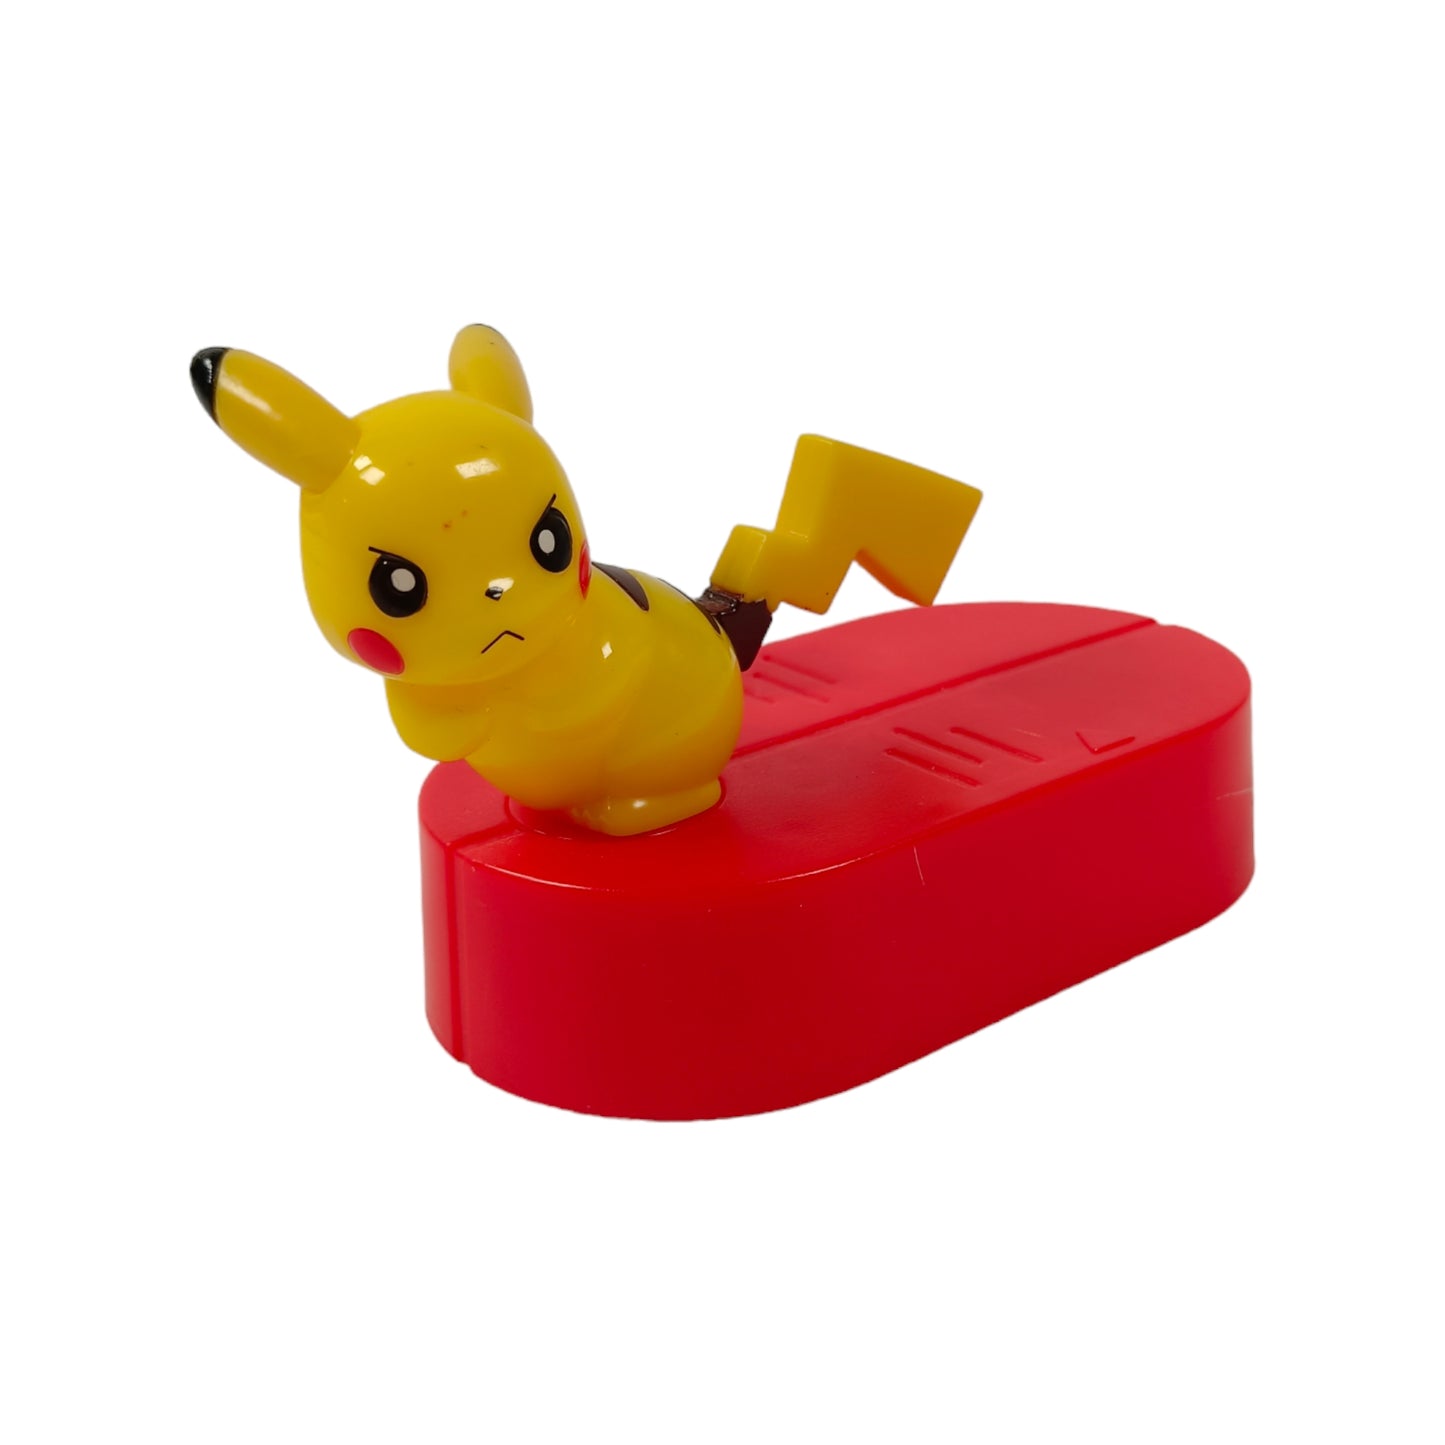 Jouet Pikachu McDonald's - Figurine avec Mécanisme de Frappe